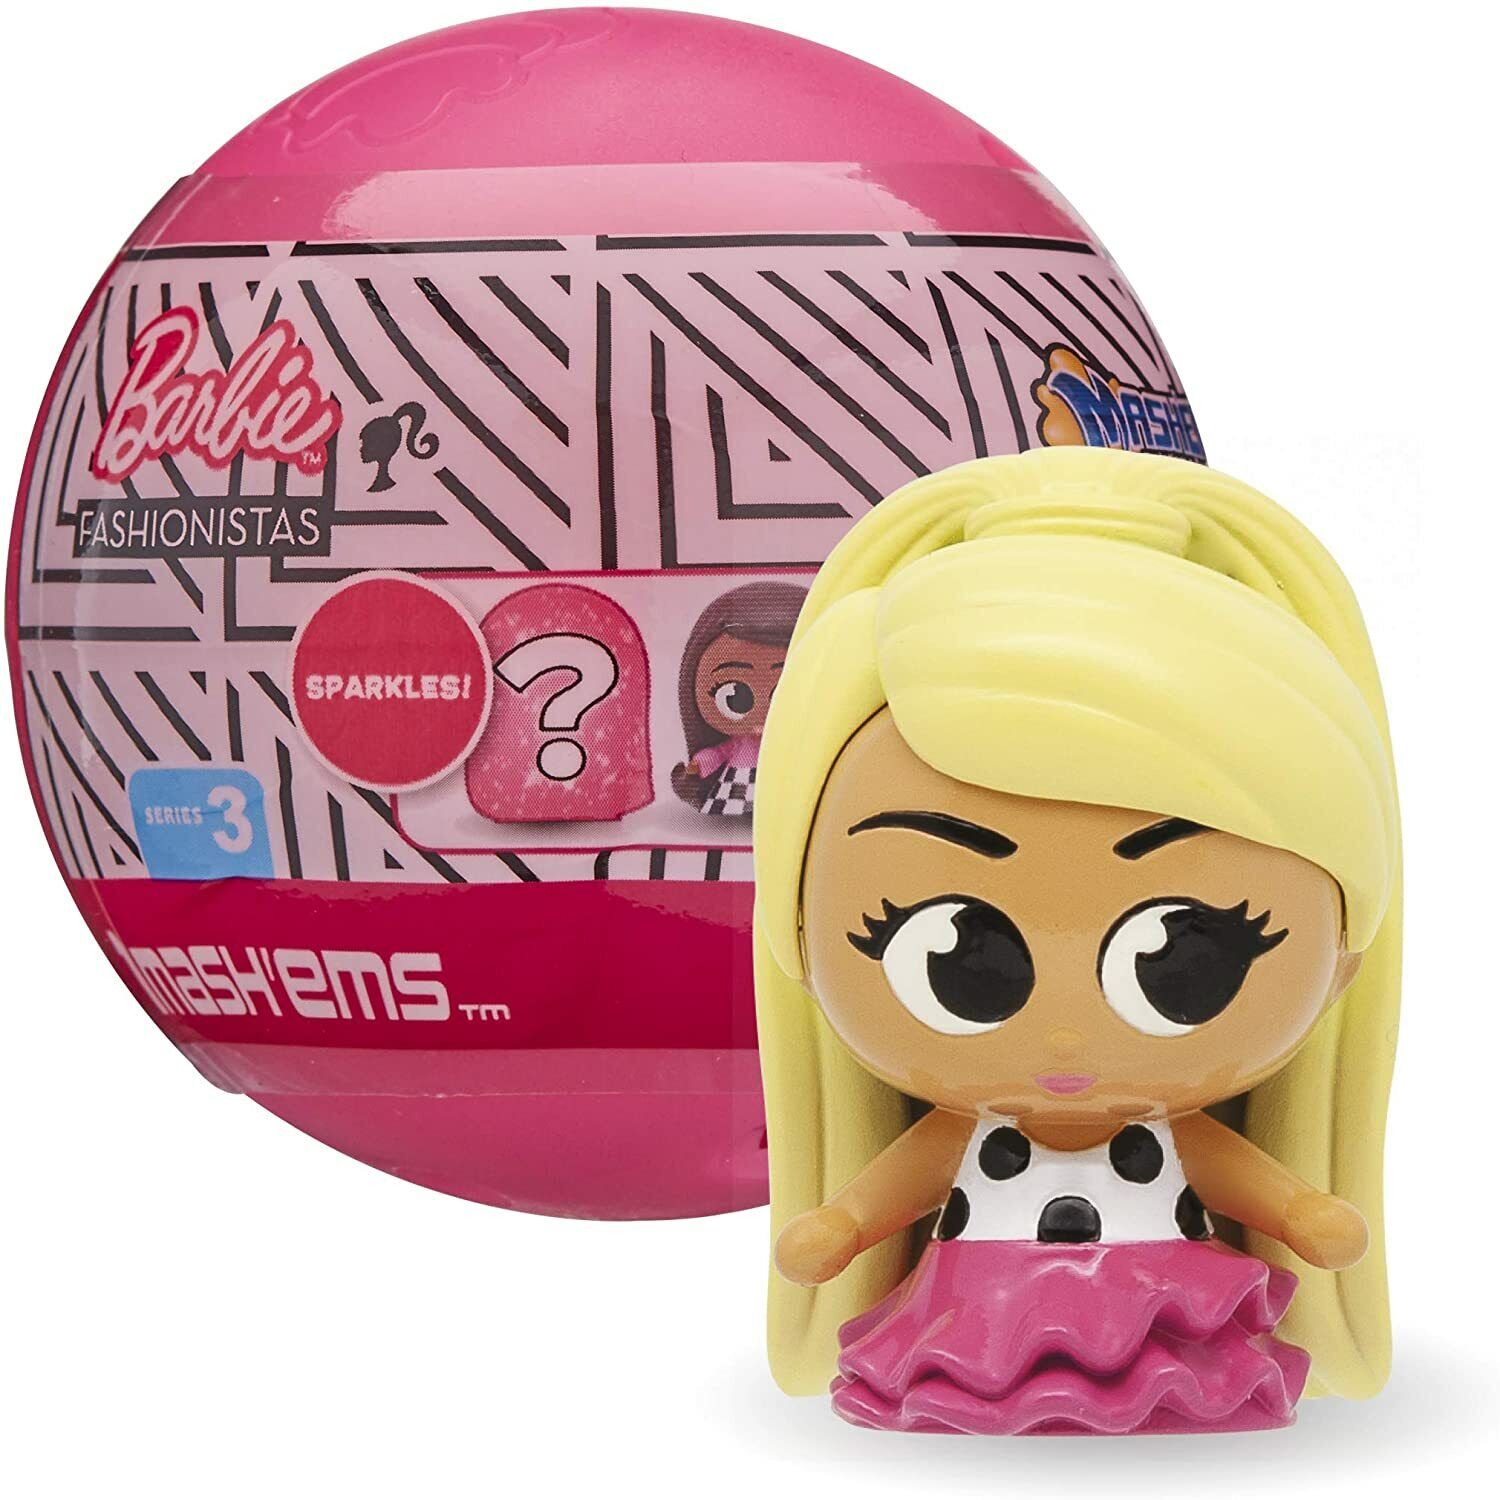 Mashems - Barbie Fashionistas - Sphere Capsule S3